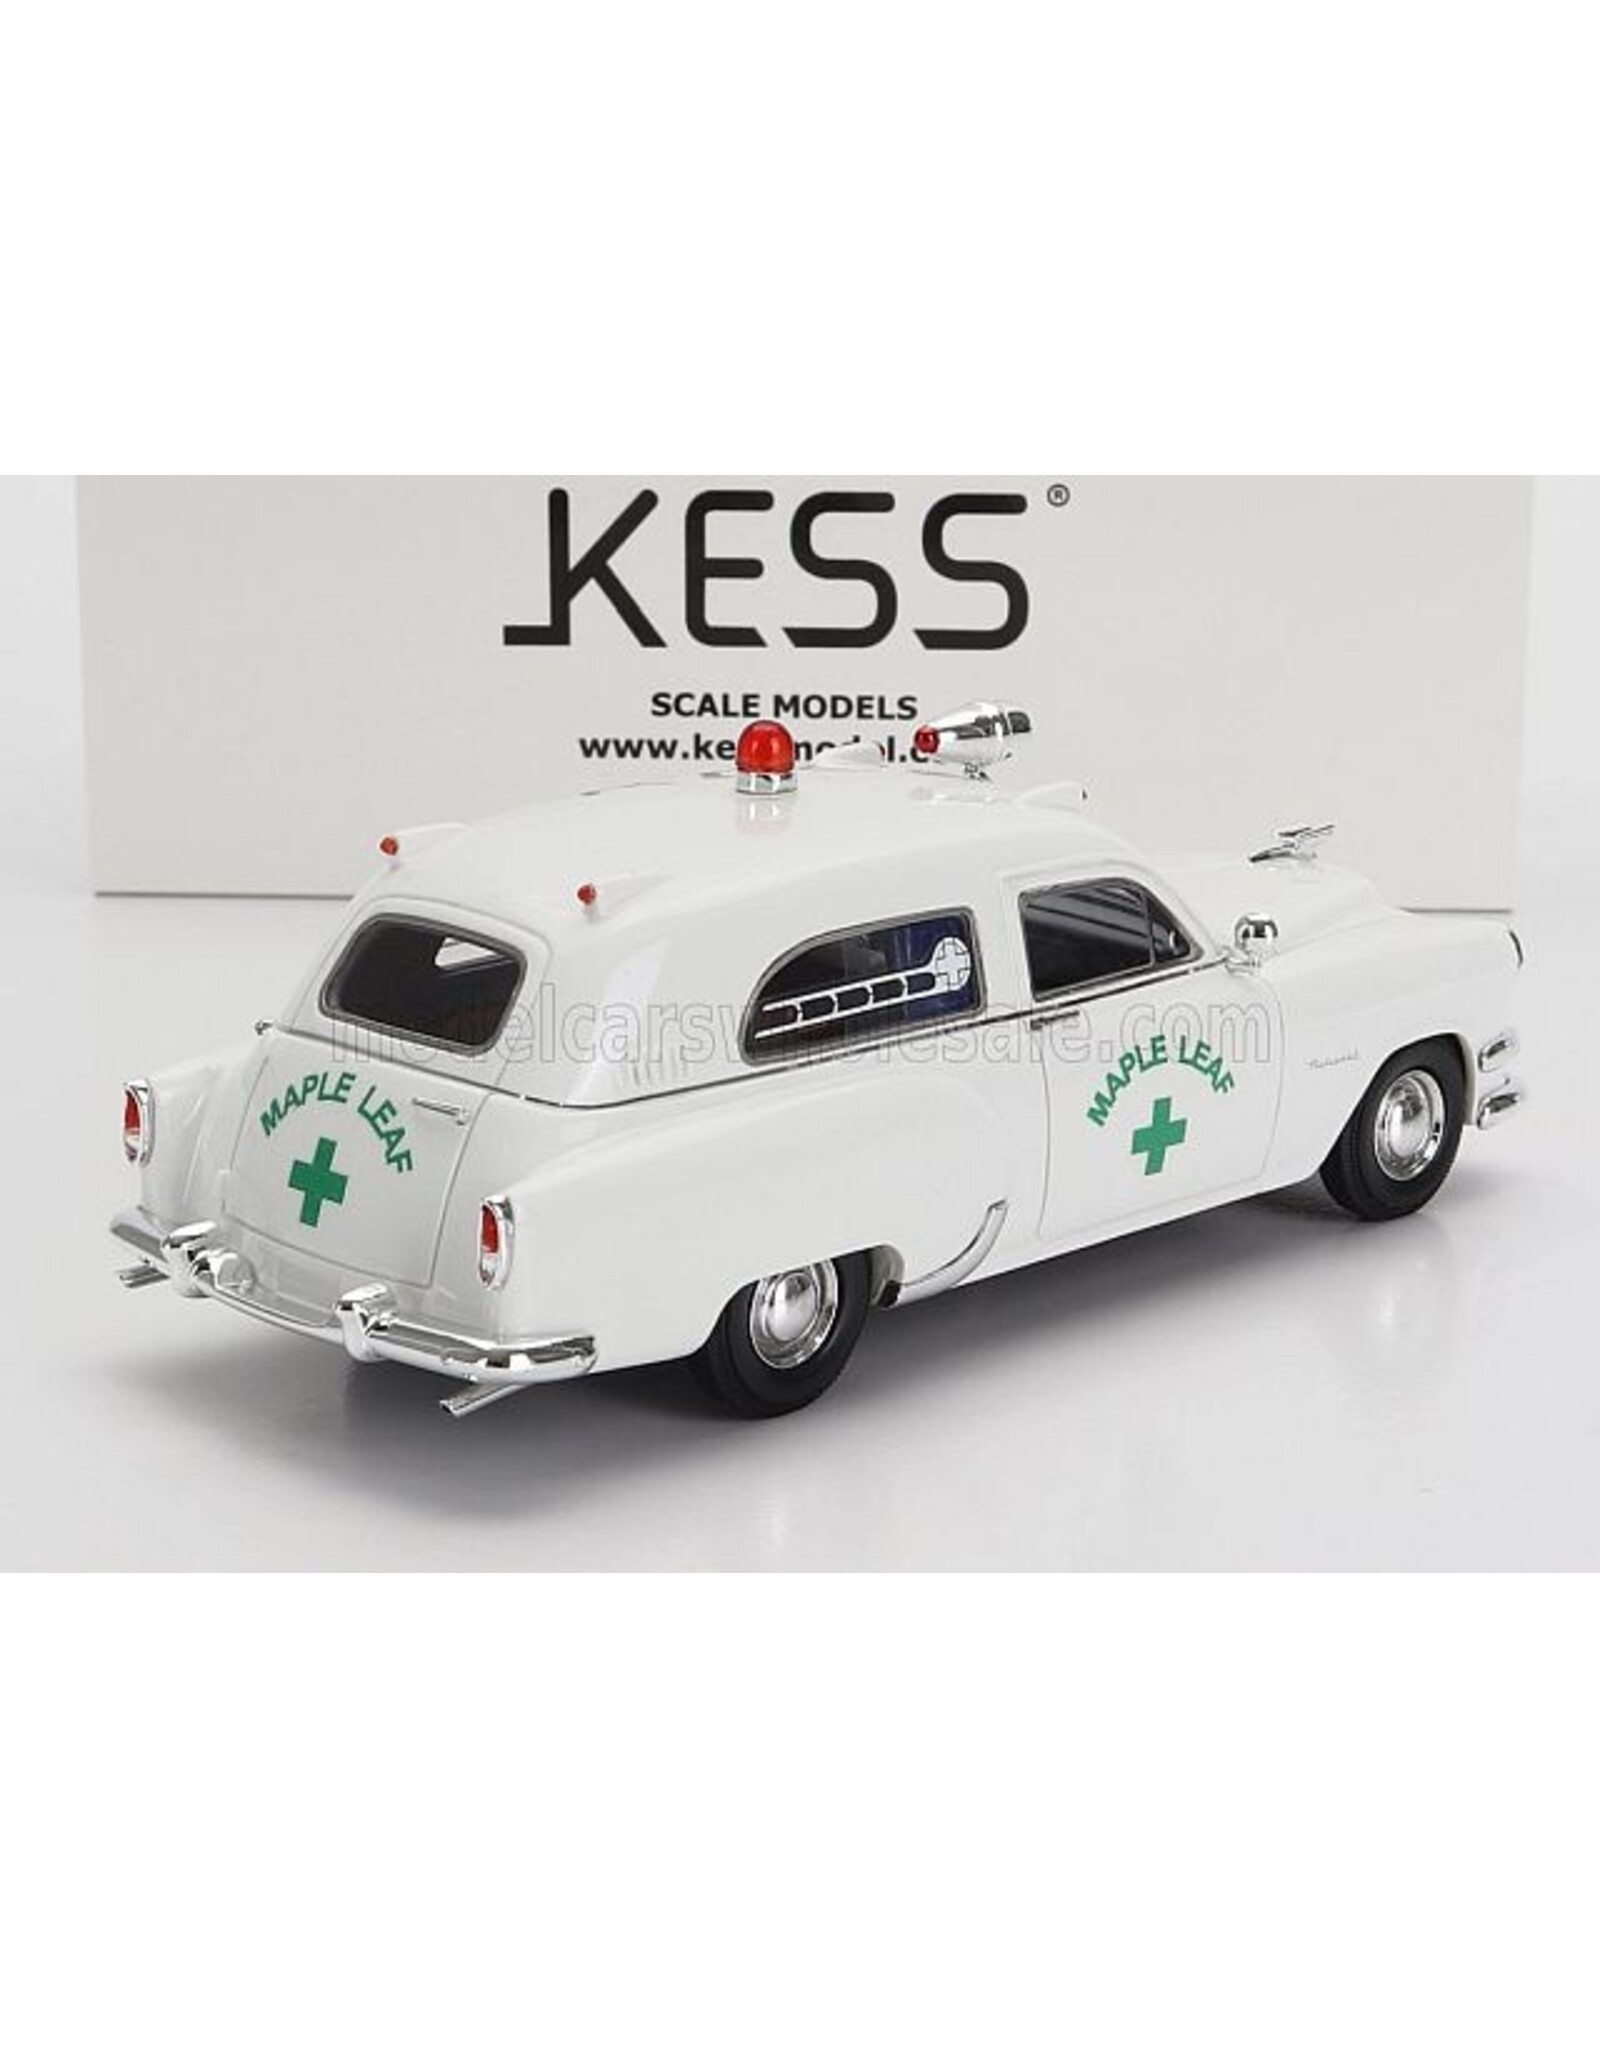 Chevrolet Chevrolet National Ambulance Maple Leaf(1954)white